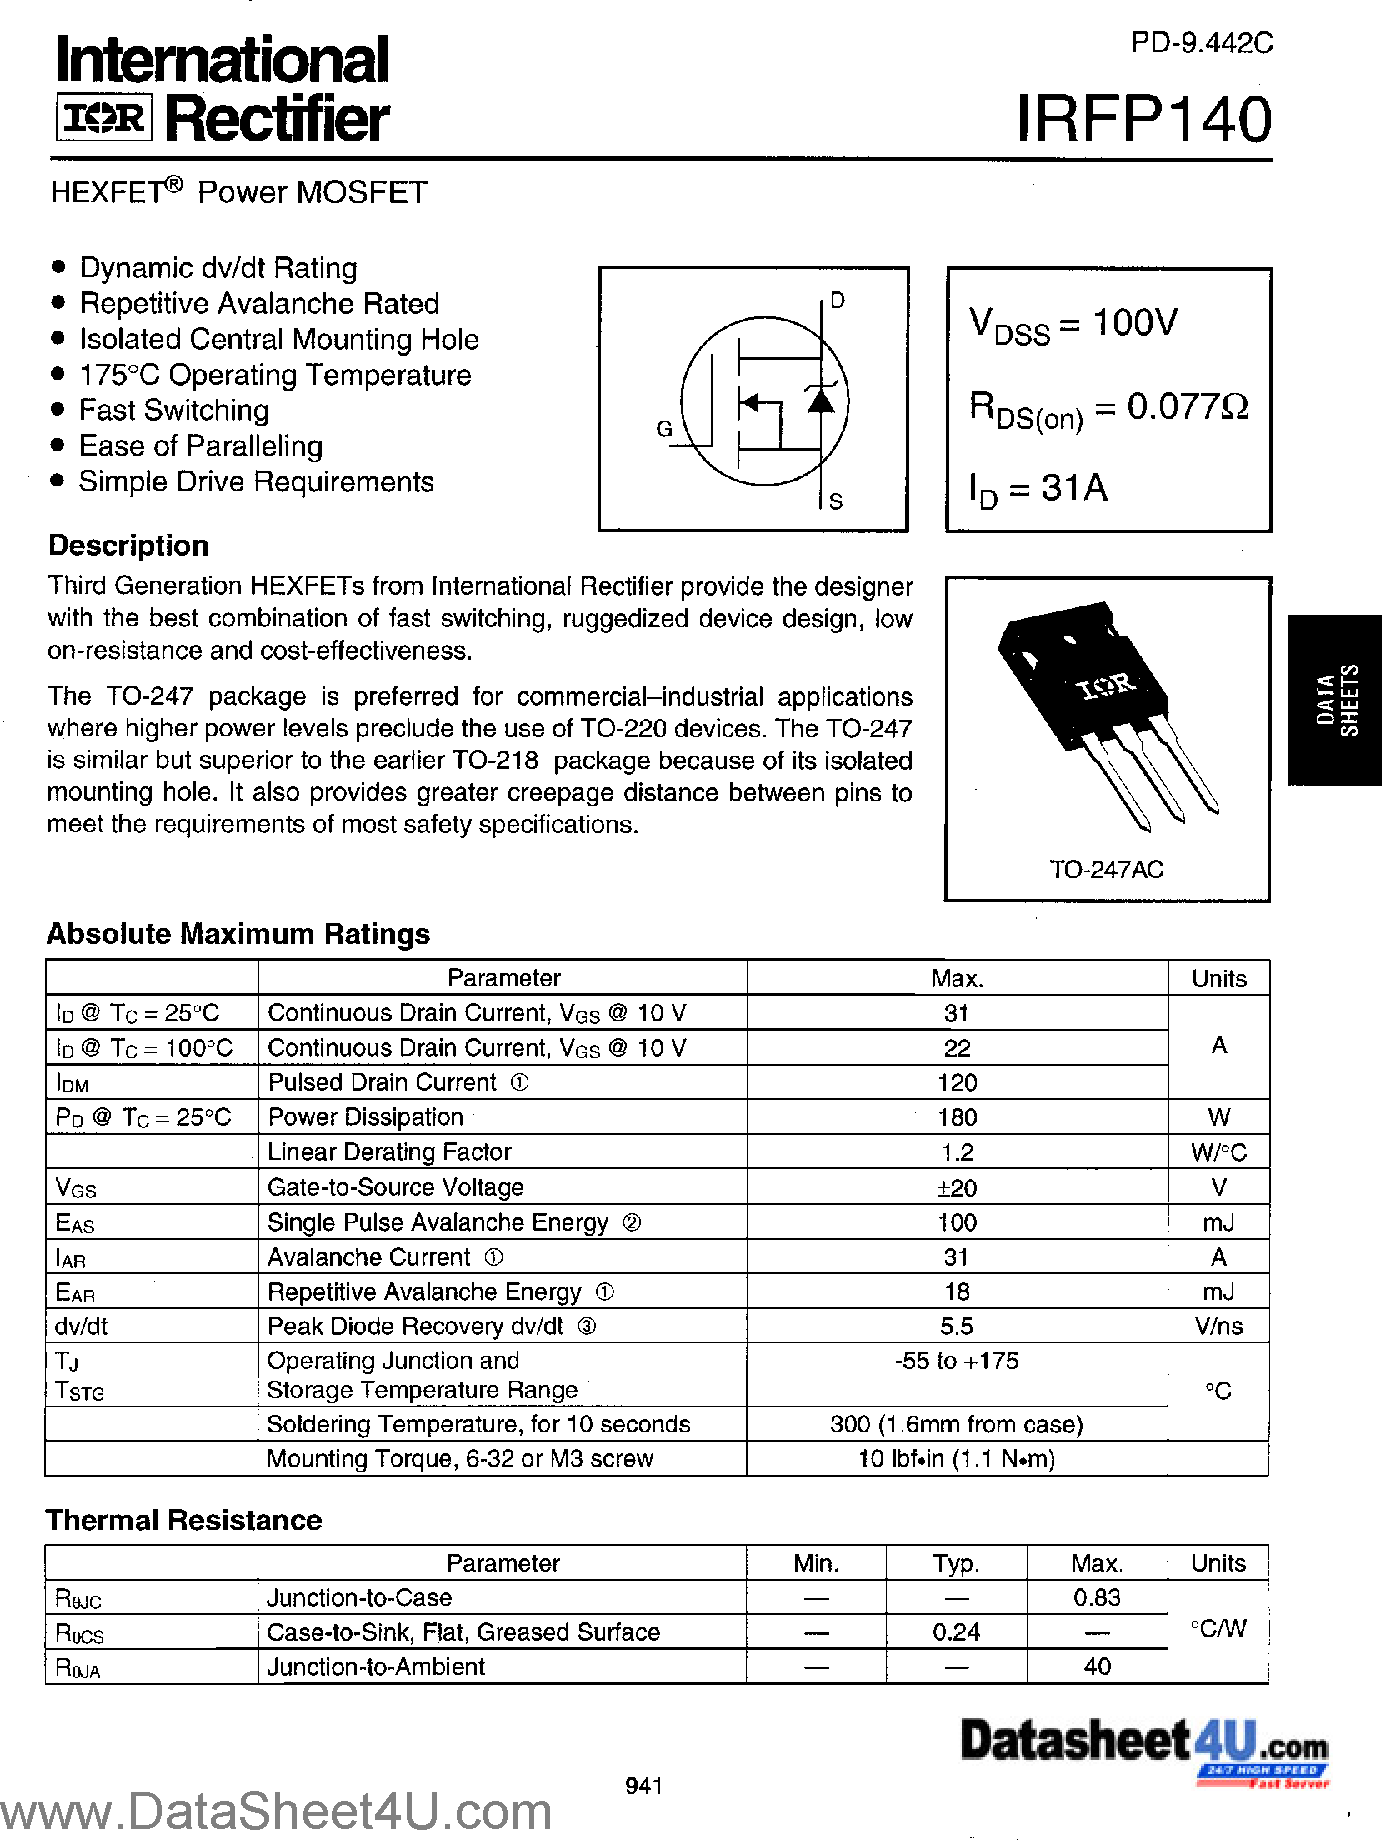 Даташит IRFP140 - Power MOSFET страница 1